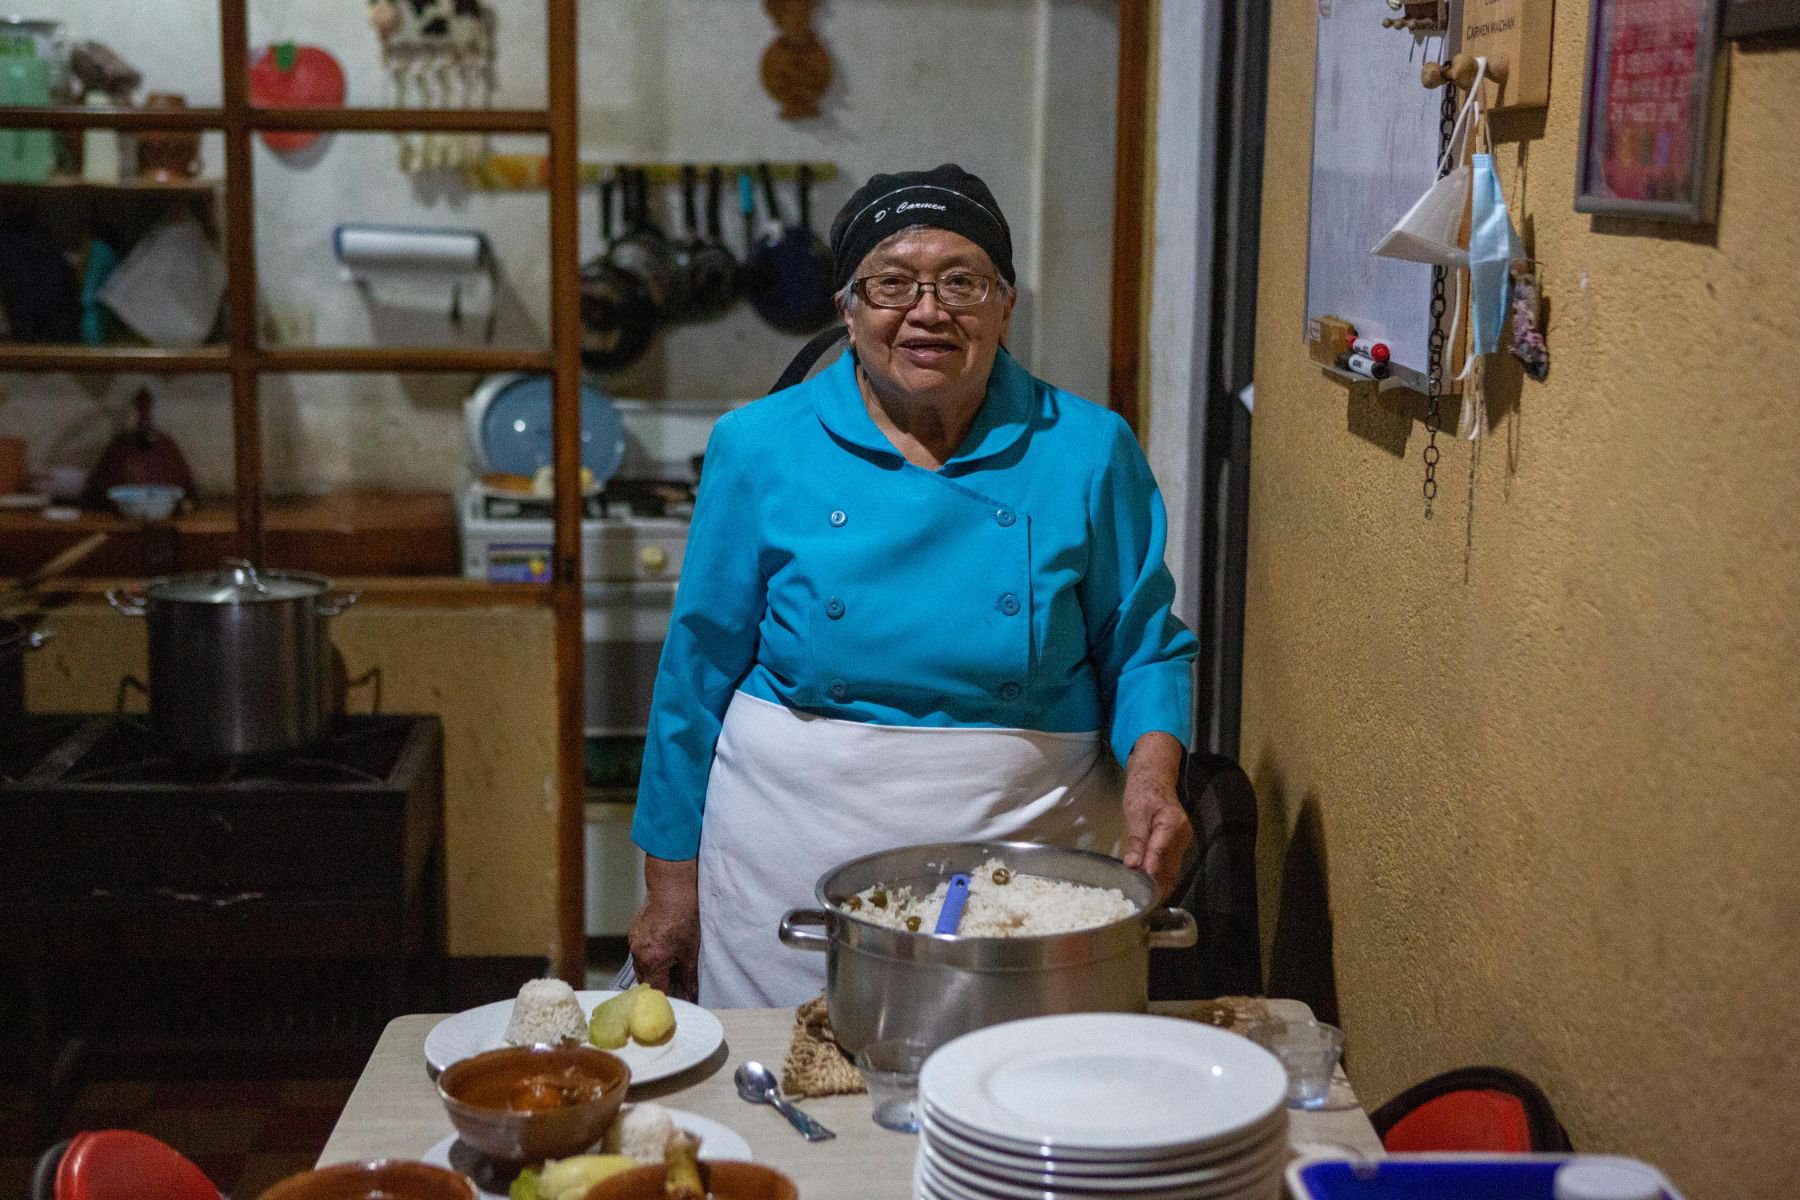 Cocinera-Tradicional-Dona-Carmen-San-Juan-del-Obispo-Cena-Comida-Tipica-Guatemalteca-Evento-La-Cosecha-Guatemala-Guate-Mister-Menu-Gastronomico-Tursimo-de-Cafe-Agroturismo-65.jpg